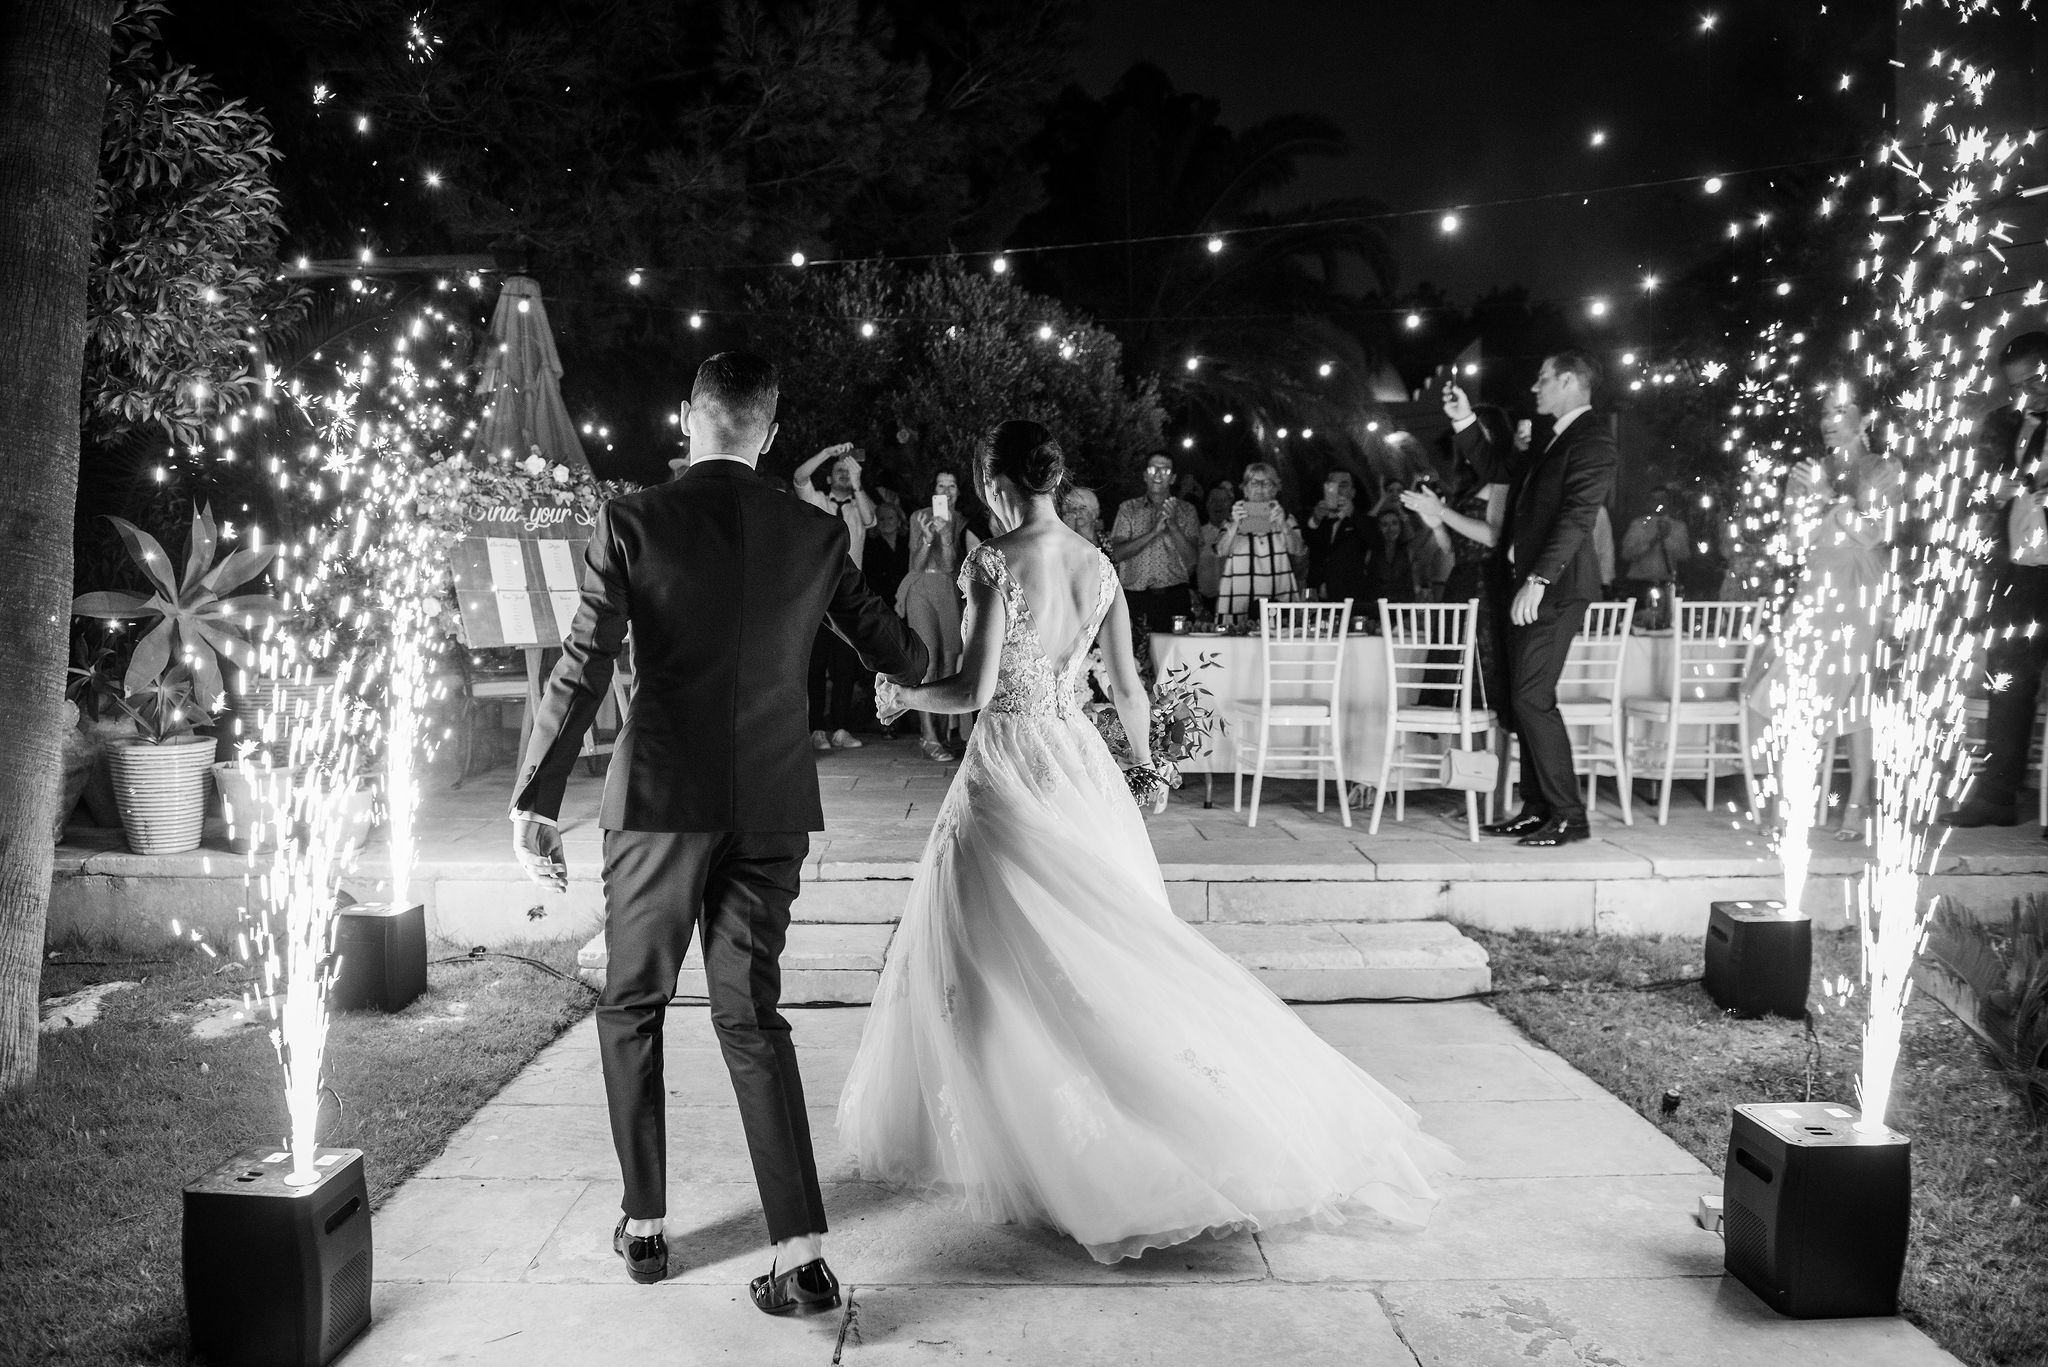 The Ibiza Wedding Photographer: Sofia Gomez Photography